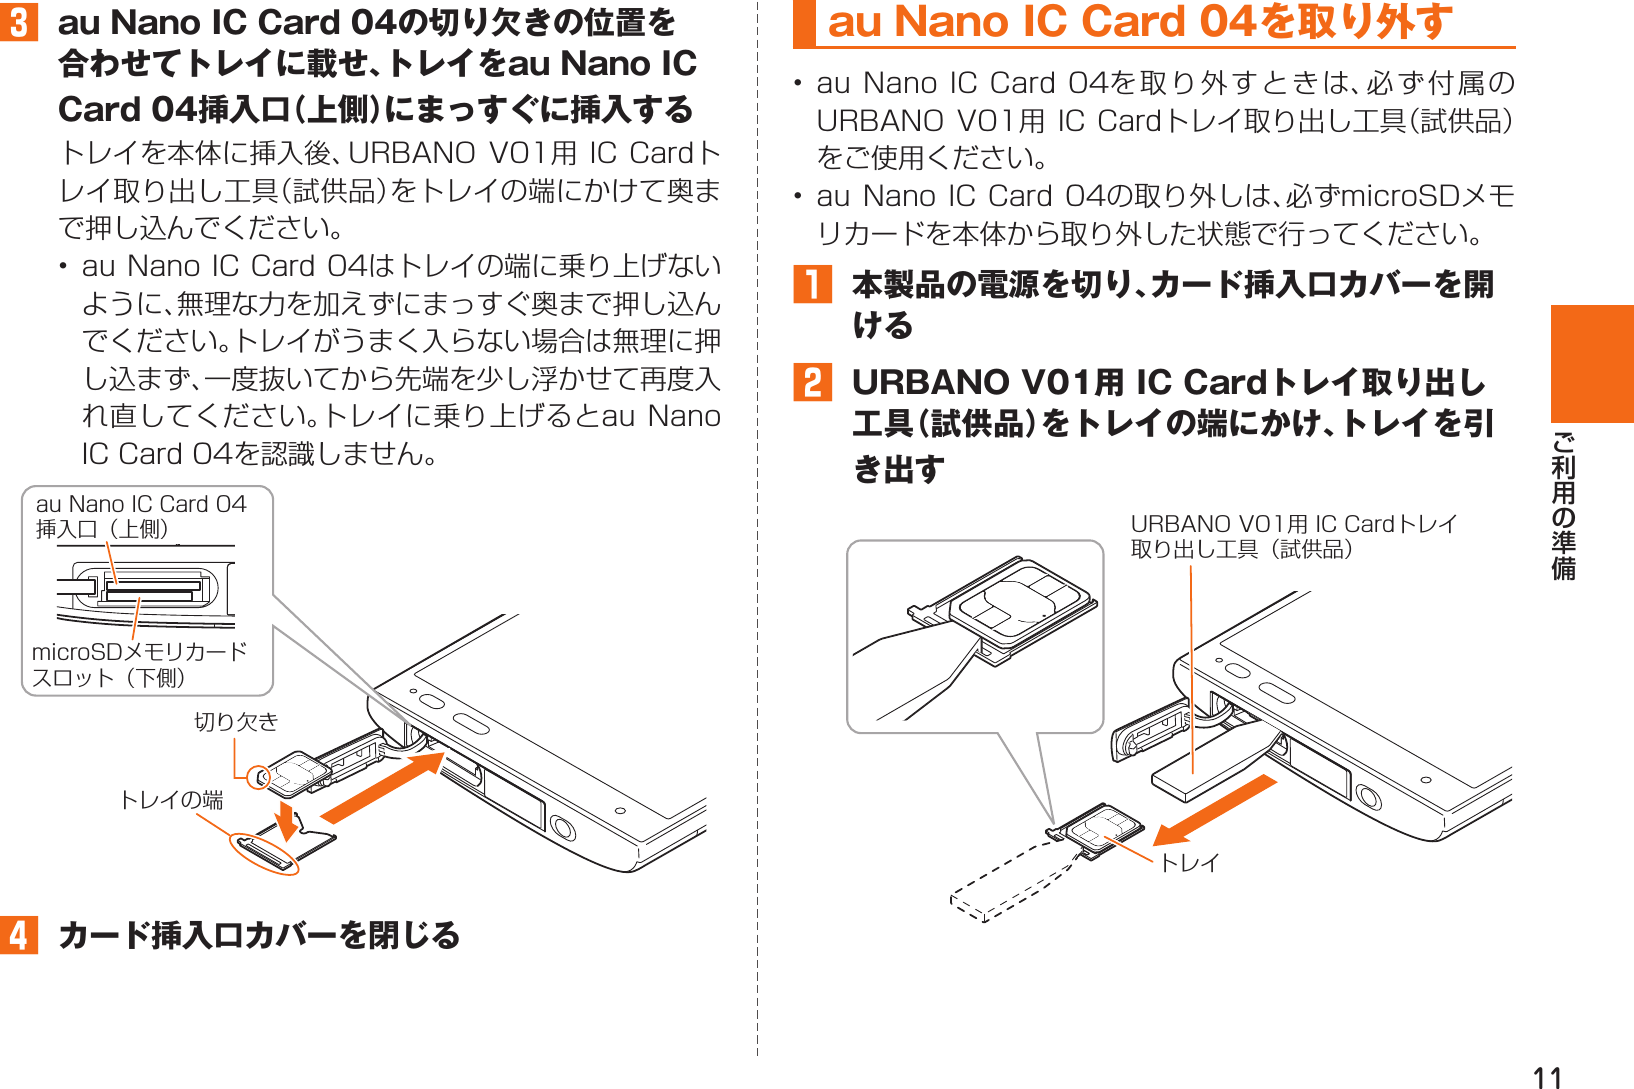 11󱈤  au Nano IC Card 04の切り欠きの位置を合わせてトレイに載せ、トレイをau Nano IC Card 04挿入口（上側）にまっすぐに挿入する  切り欠きau Nano IC Card 04挿入口（上側）microSDメモリカードスロット（下側）トレイの端󱈦  カード挿入口カバーを閉じるau Nano IC Card 04を取り外す      󱈠  本製品の電源を切り、カード挿入口カバーを開ける󱈢  URBANO V01用 IC Cardトレイ取り出し工具（試供品）をトレイの端にかけ、トレイを引き出すトレイURBANO V01用 IC Cardトレイ取り出し工具（試供品）